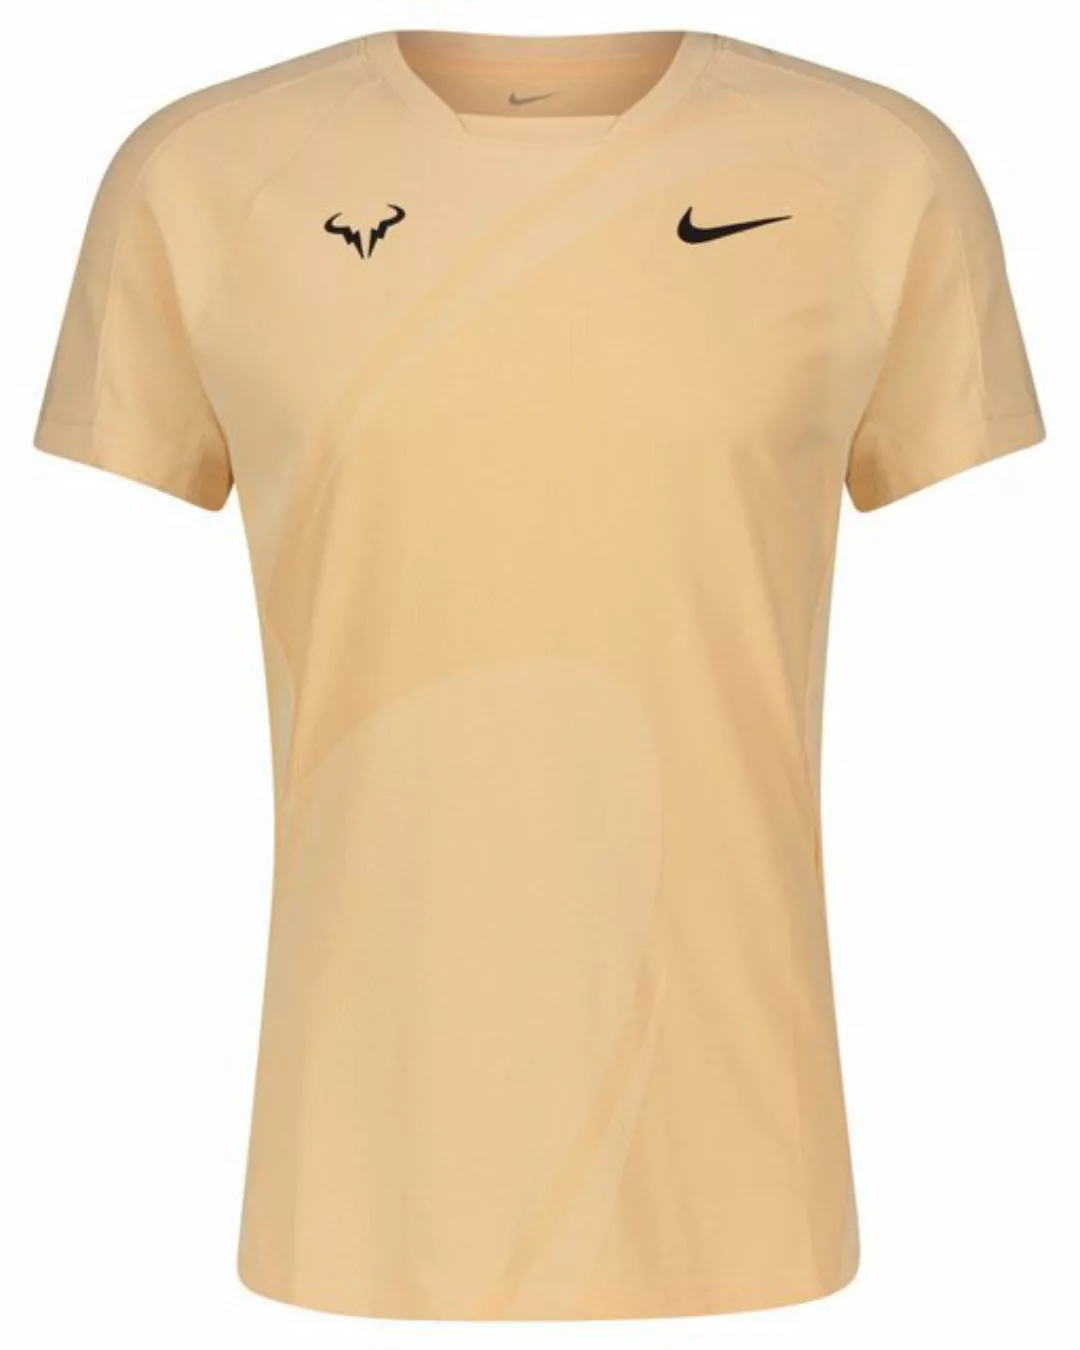 Nike Tennisshirt Herren Tennis-Shirt DRI FIT ADV RAFA günstig online kaufen